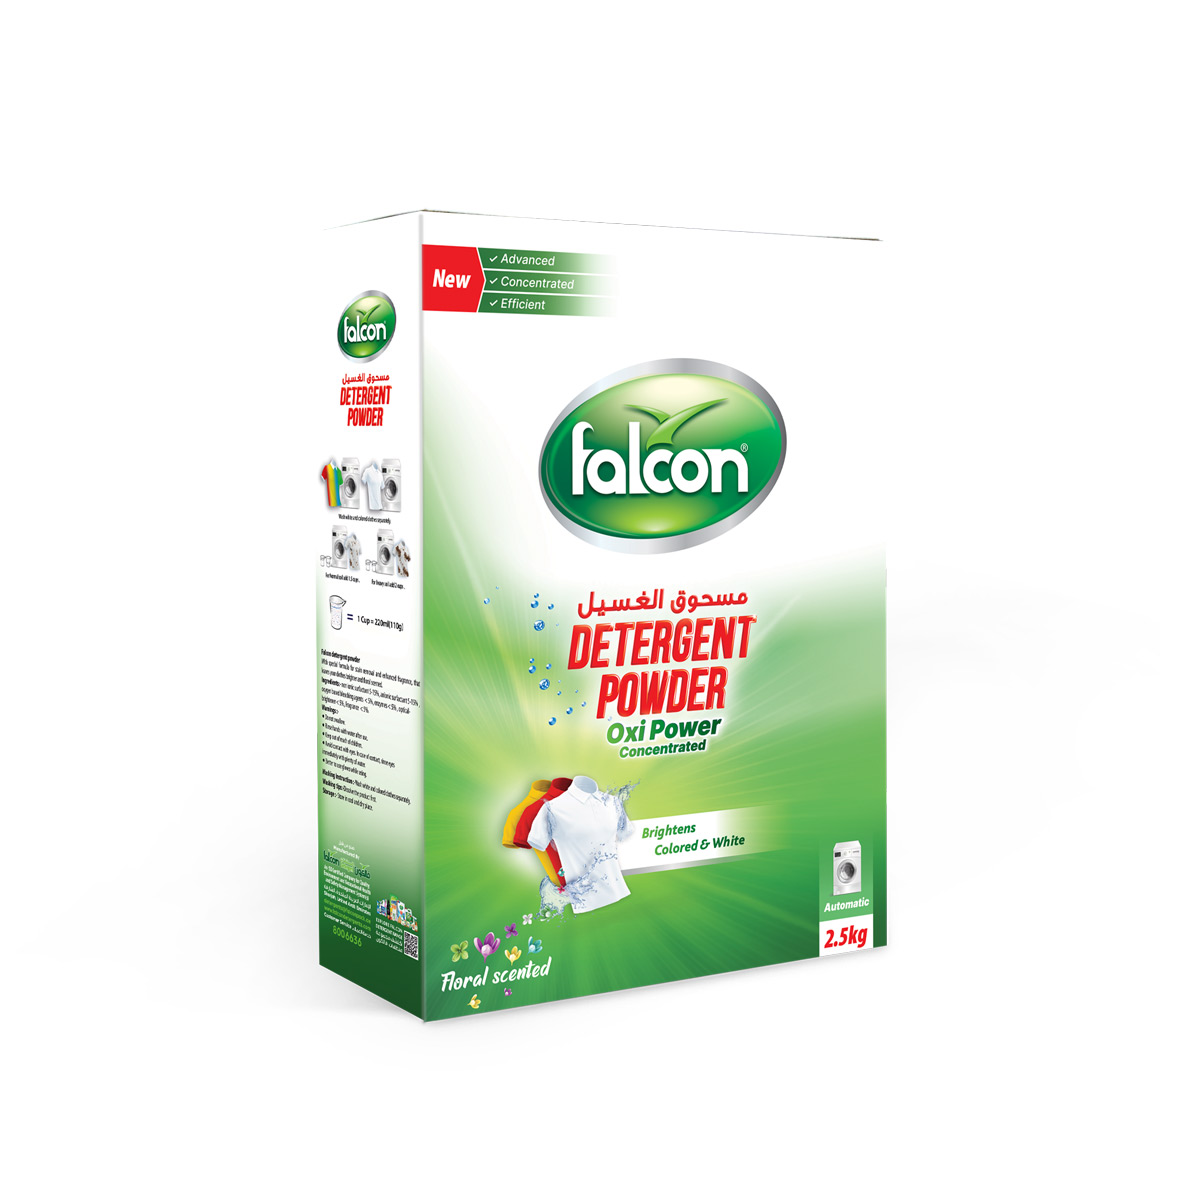 Falcon Detergent Powder ( Oxi Power, Low Foam, 3 kg Pack)